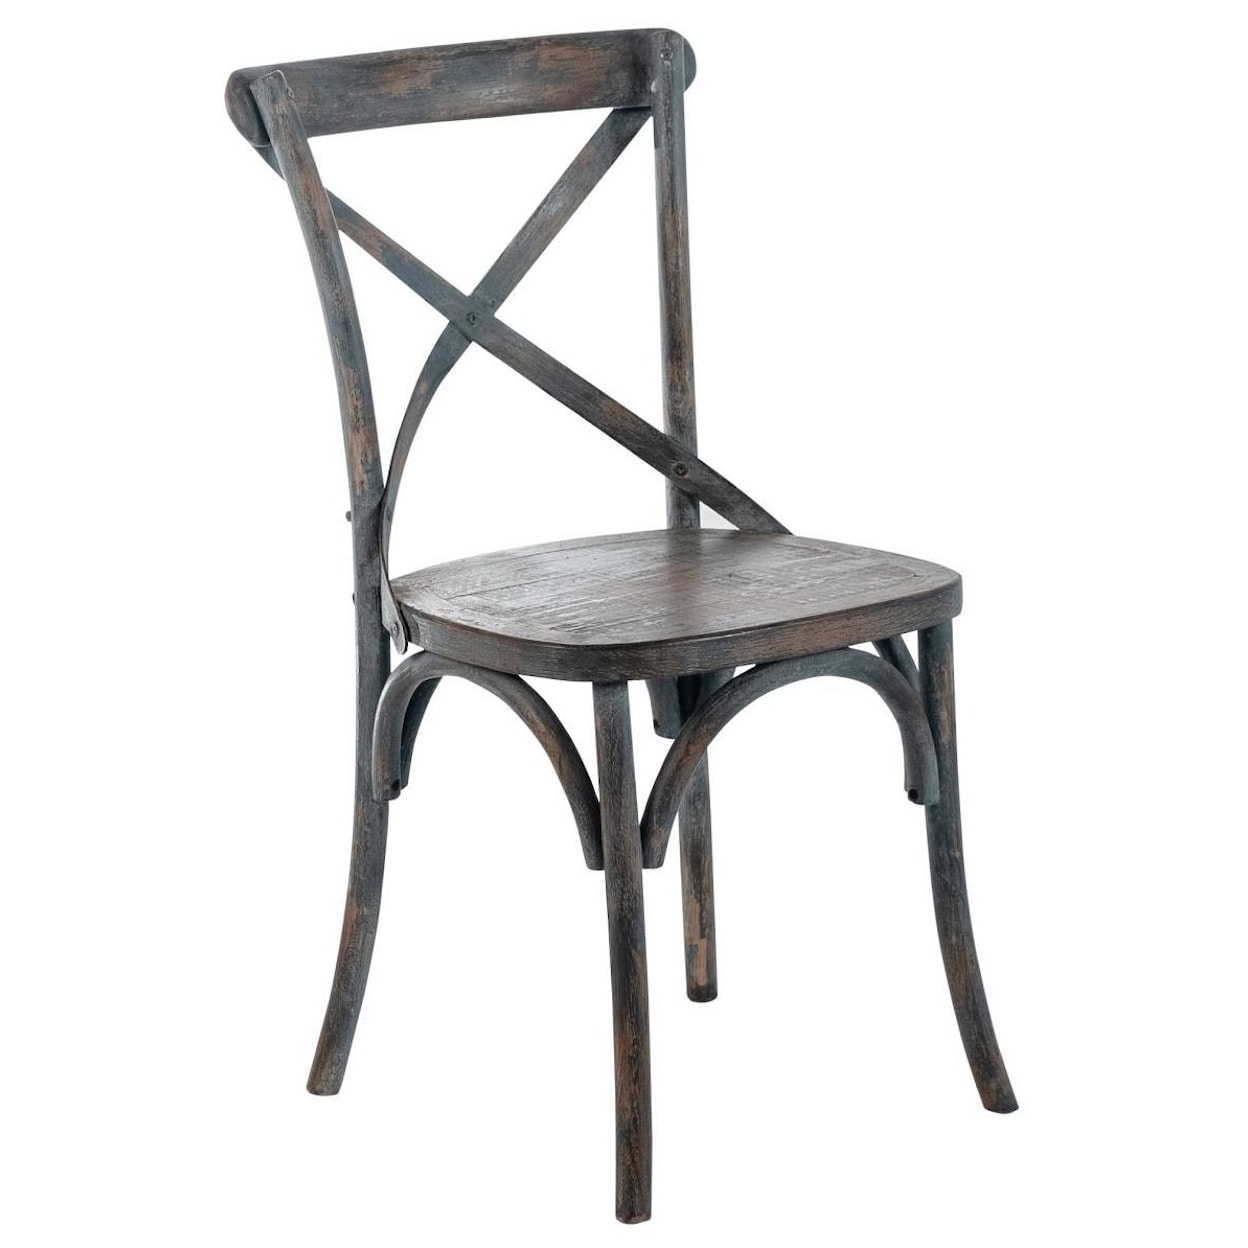 EAGLE INDUSTRIES Redmond Redmond Dining Chair Antique Blue